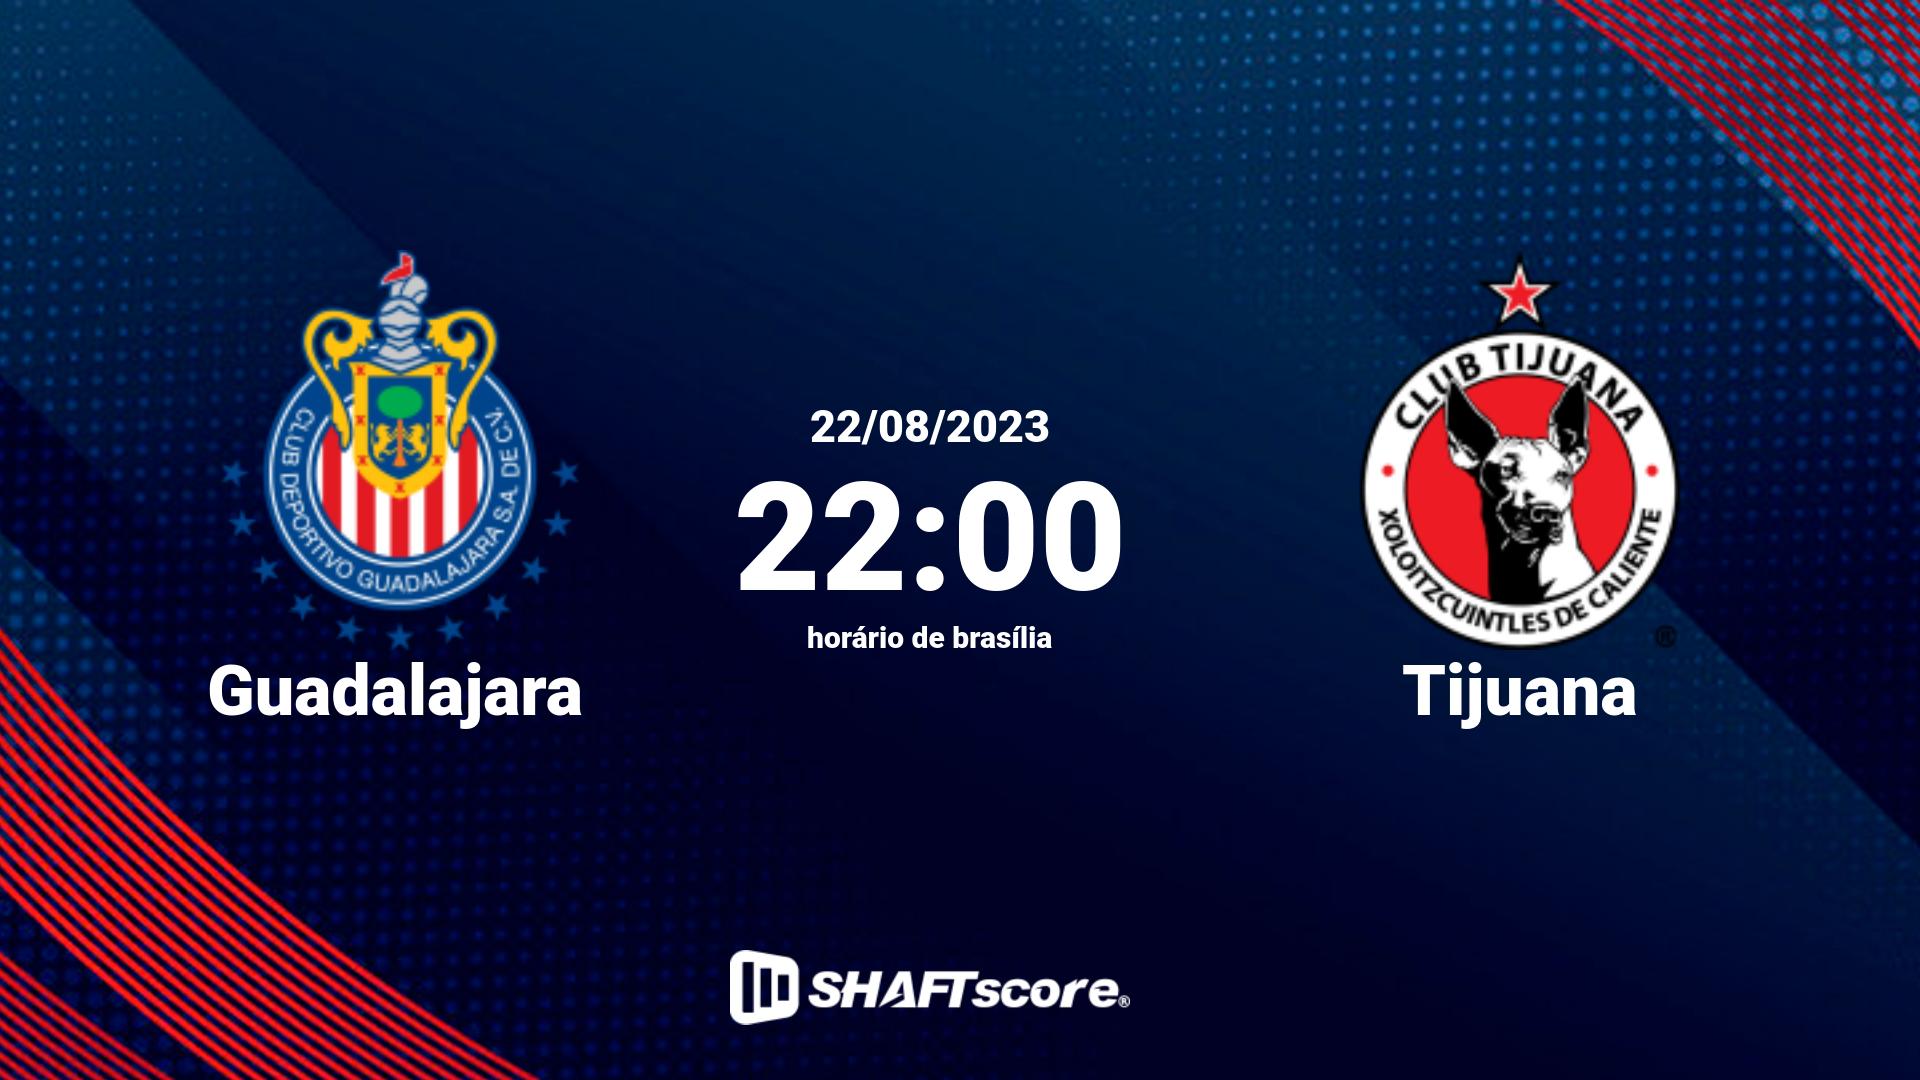 Estatísticas do jogo Guadalajara vs Tijuana 22.08 22:00